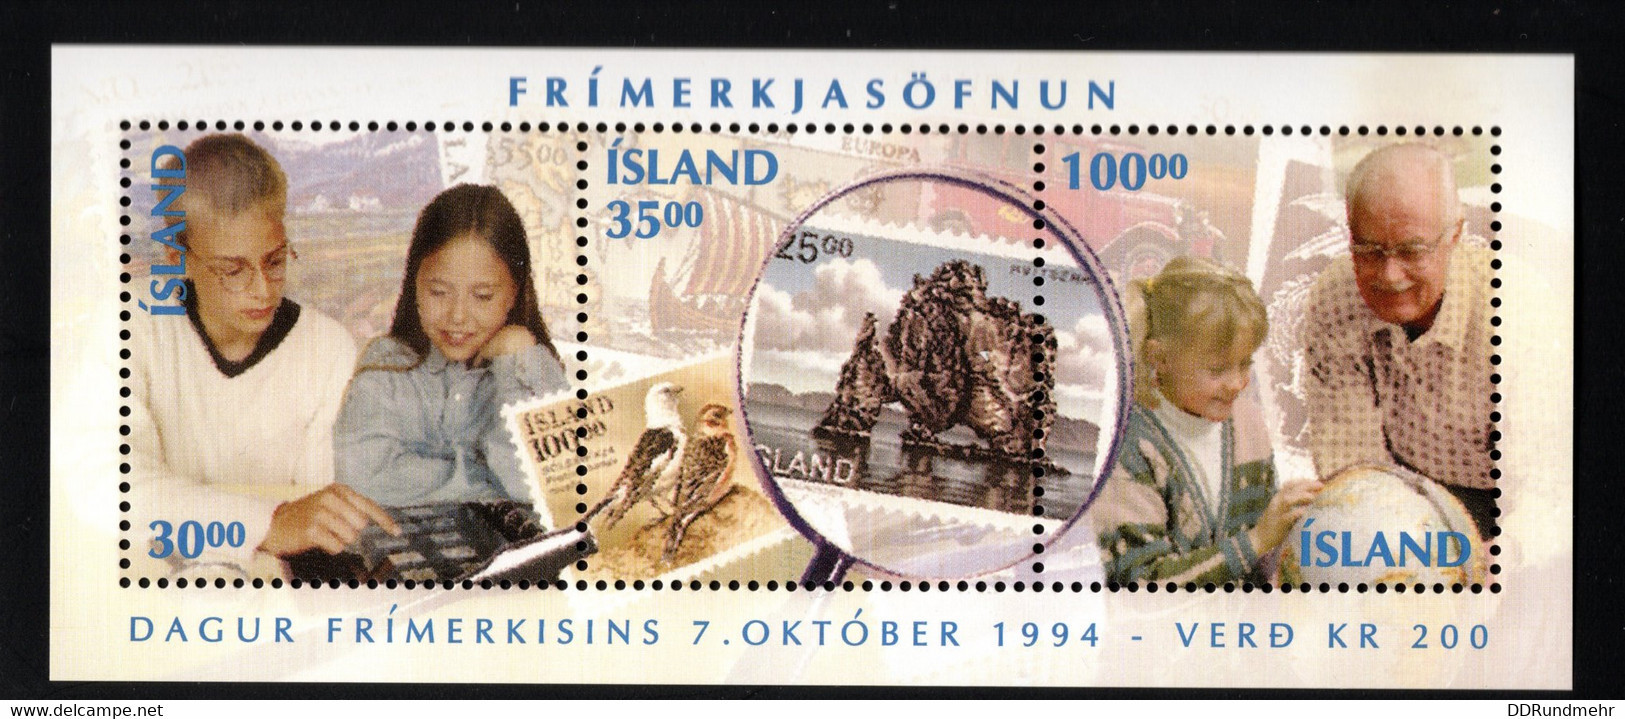 1994 Stamp Day MI IS BL17 Sn IS 789  Yt IS BF17  Sg IS MS830  AFA IS 799 Xx MNH - Blocks & Kleinbögen